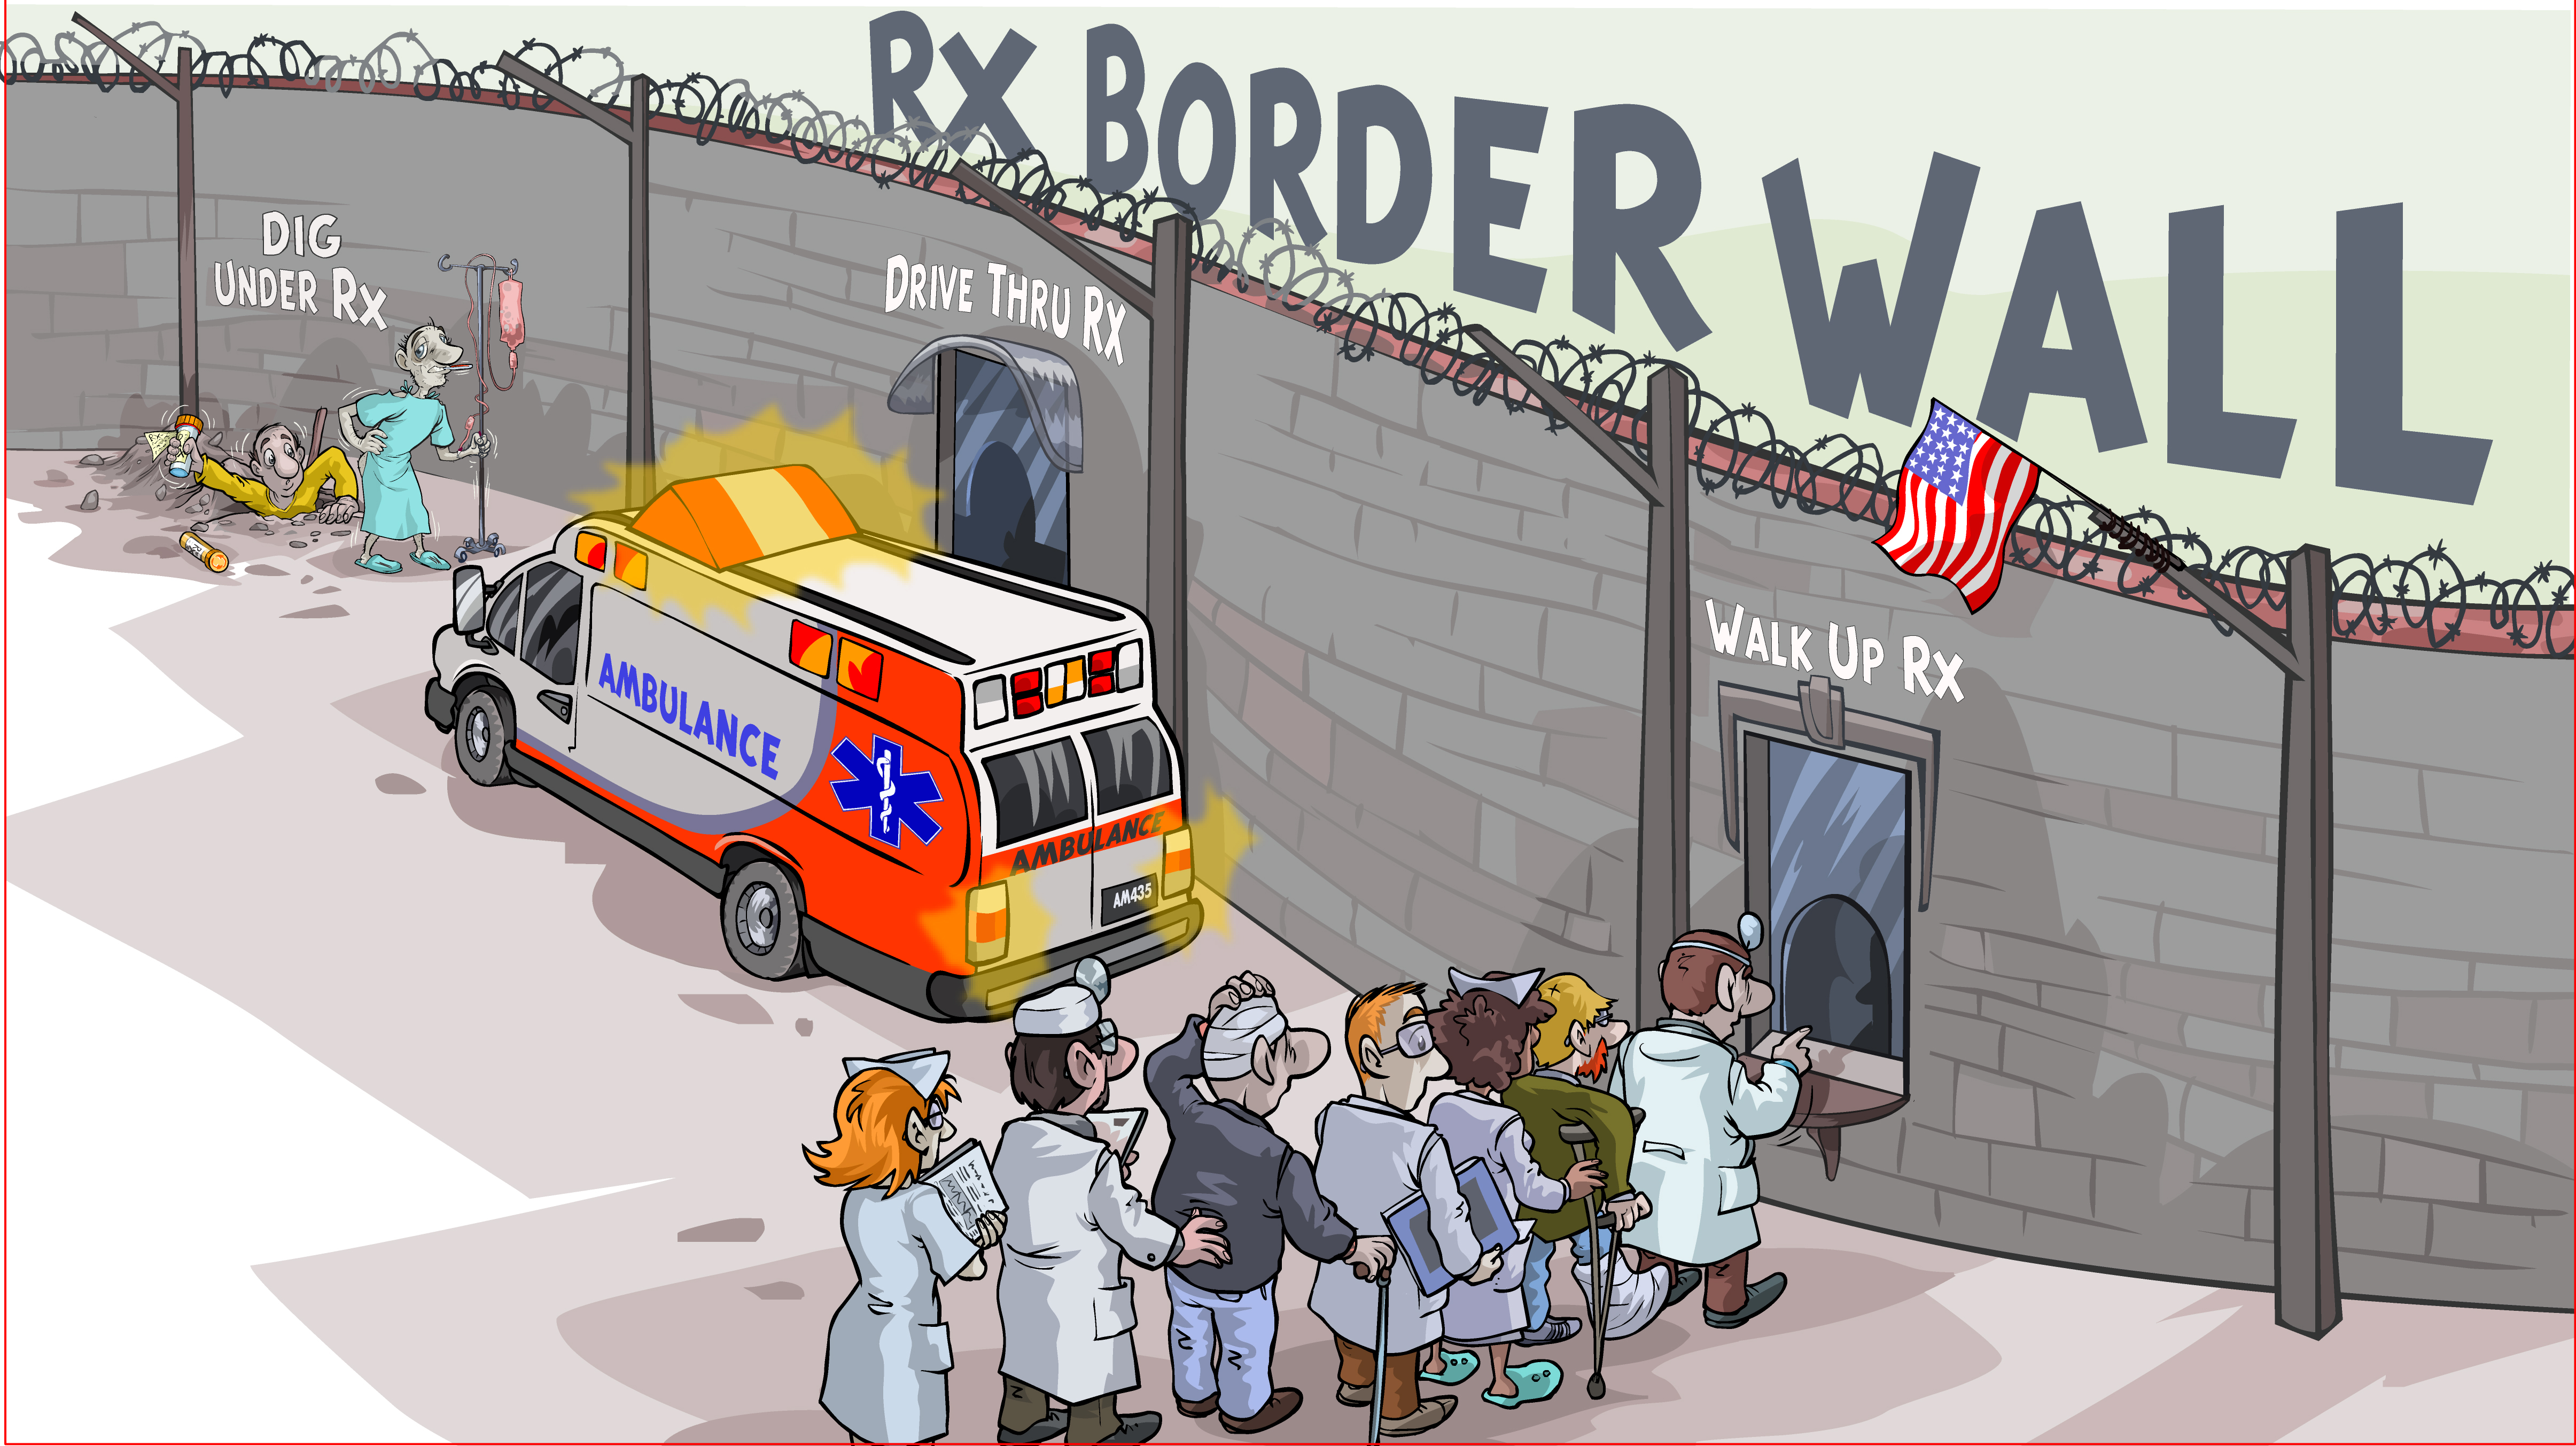 prescription drug prices are creating a border wall